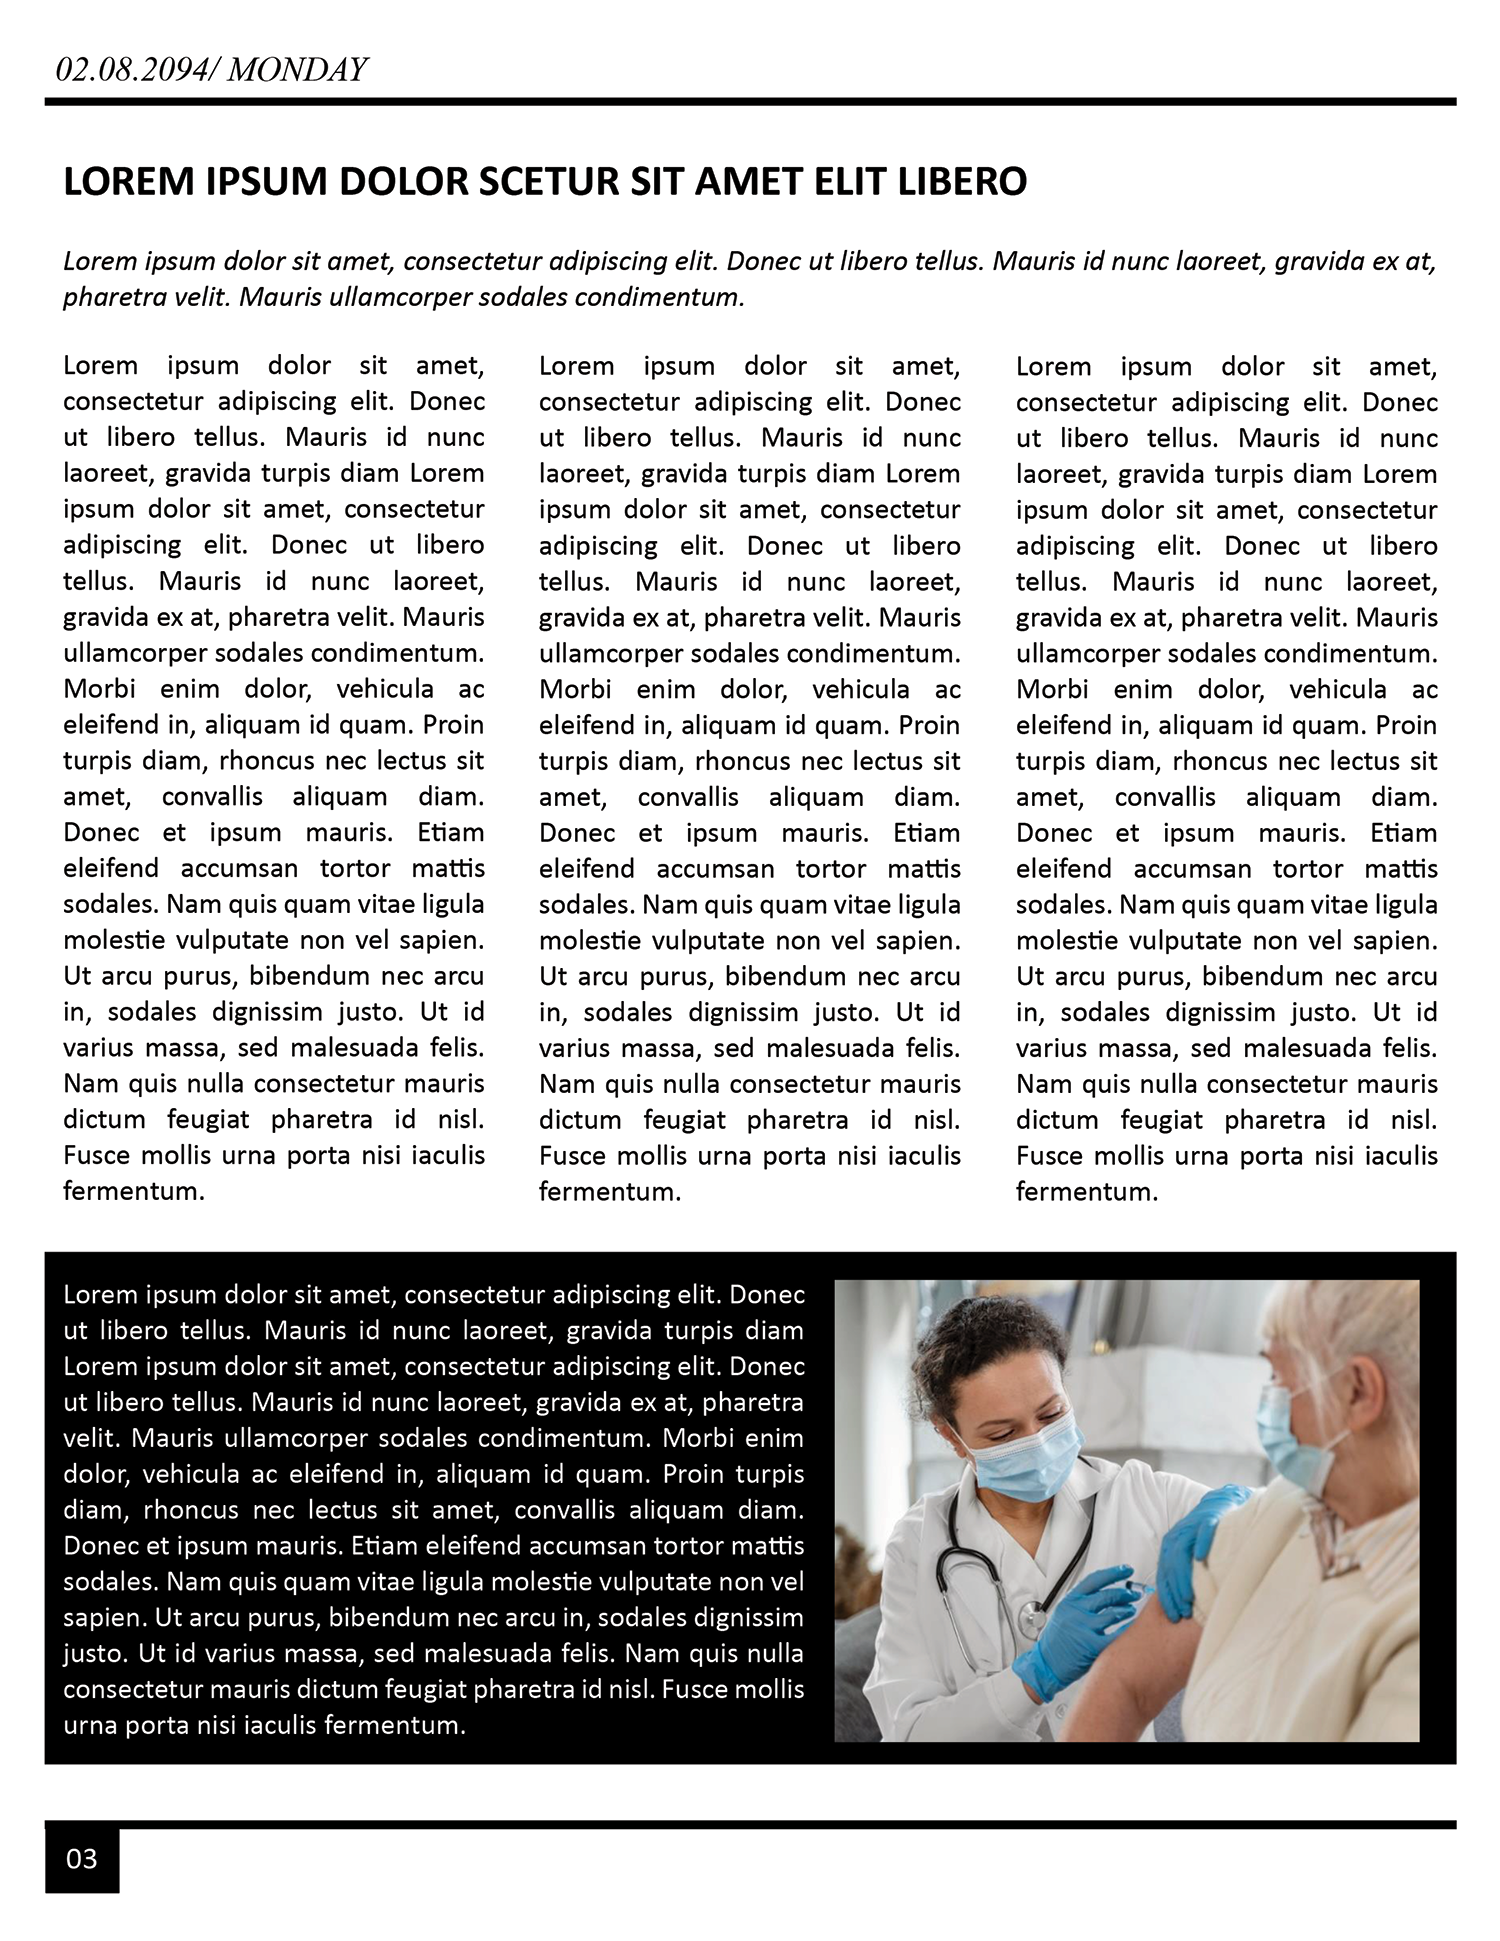 Editable Medical Newspaper Template - Word | Google Docs - Page 03